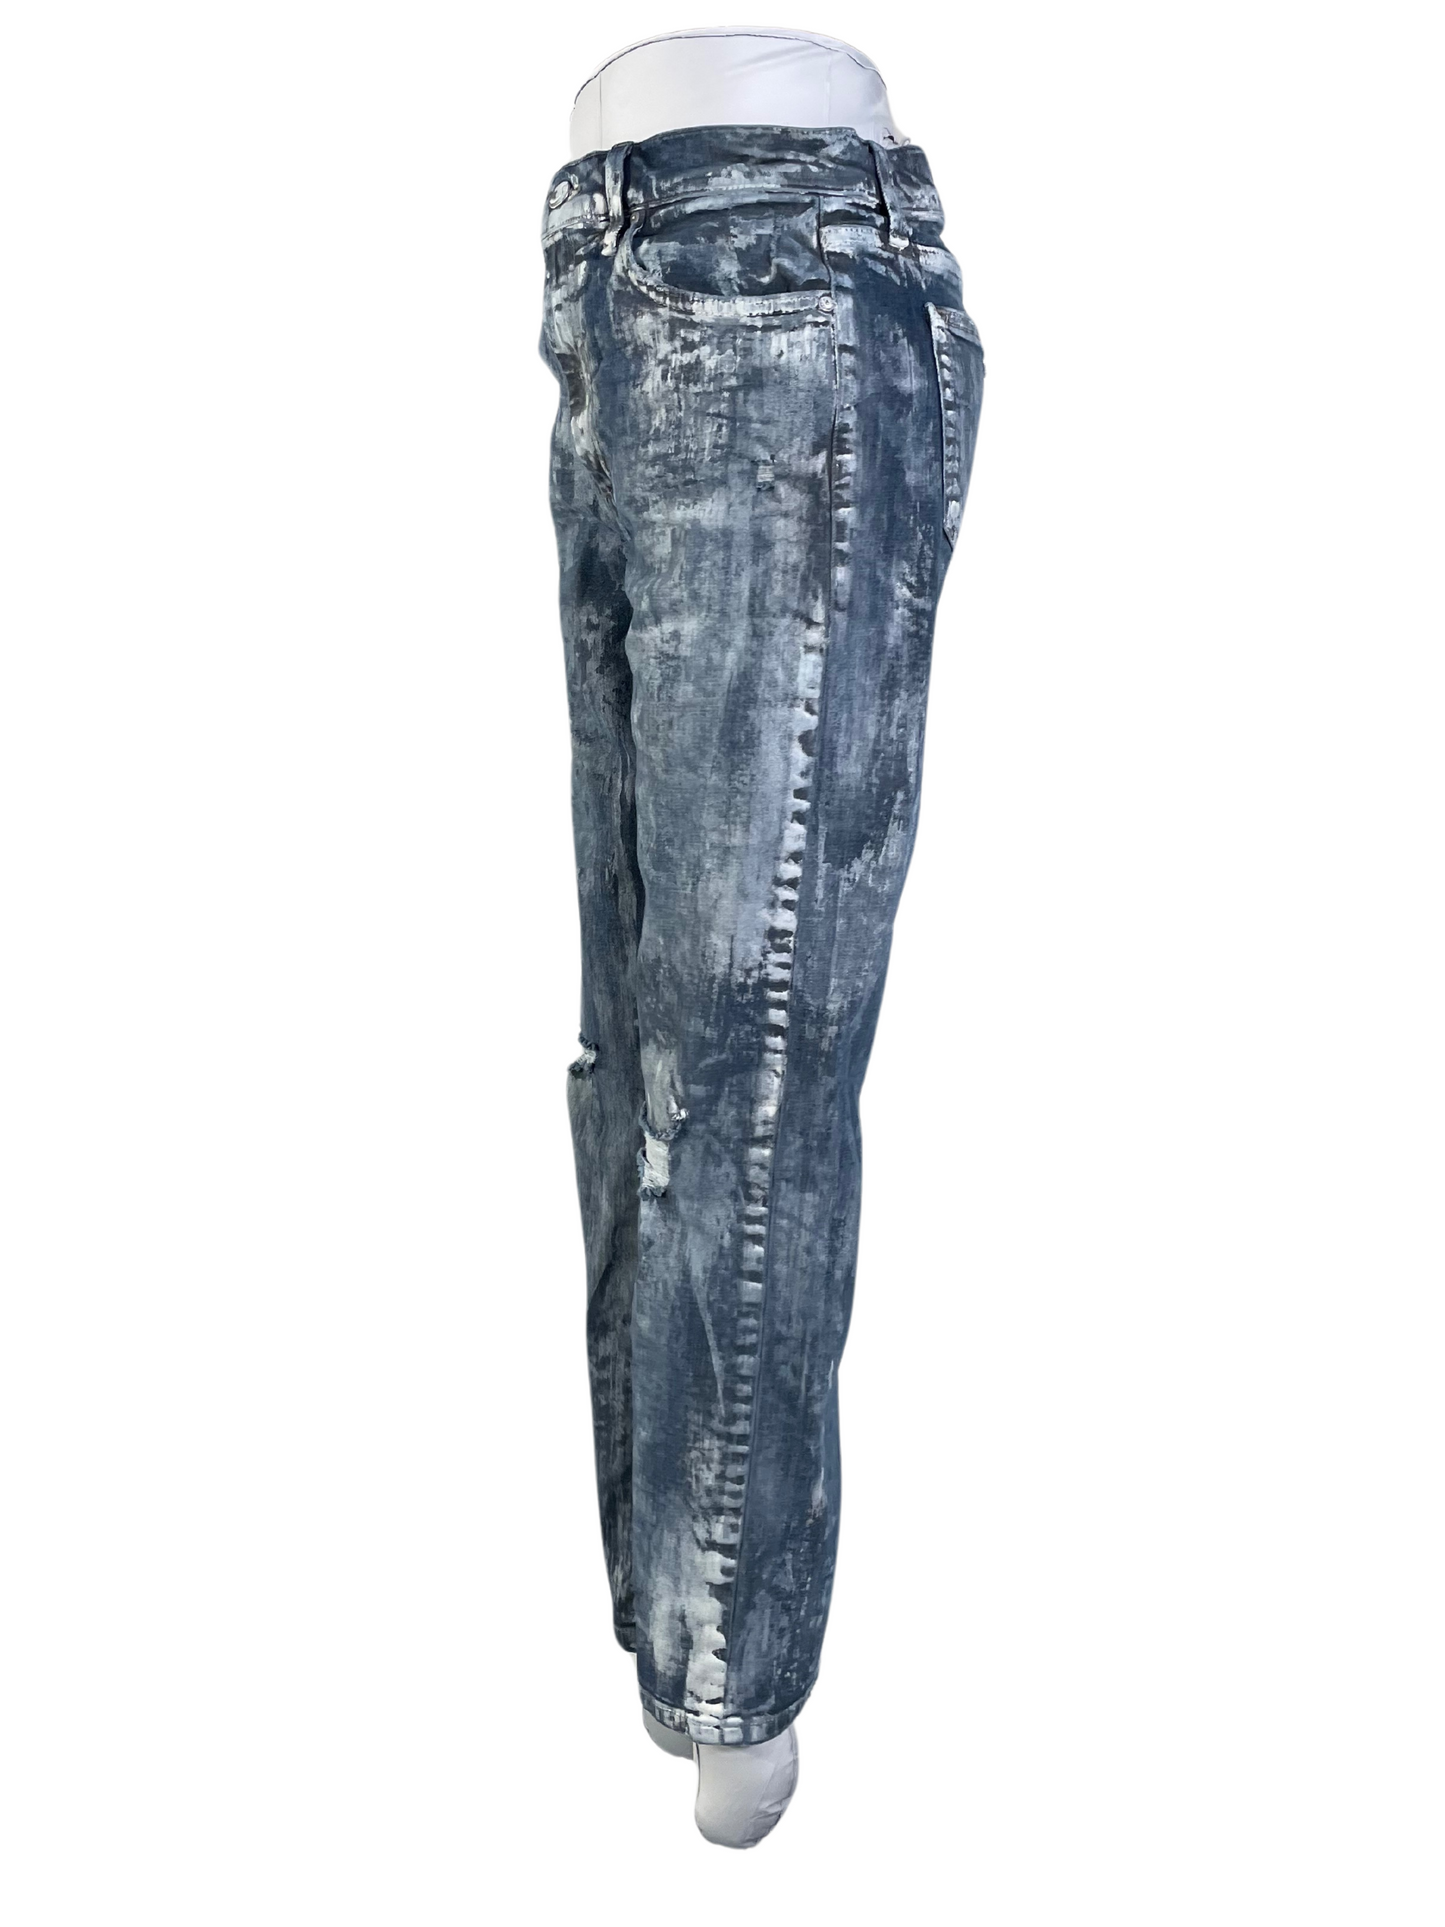 Left side seam view of painted Aden Bera Denim jeans